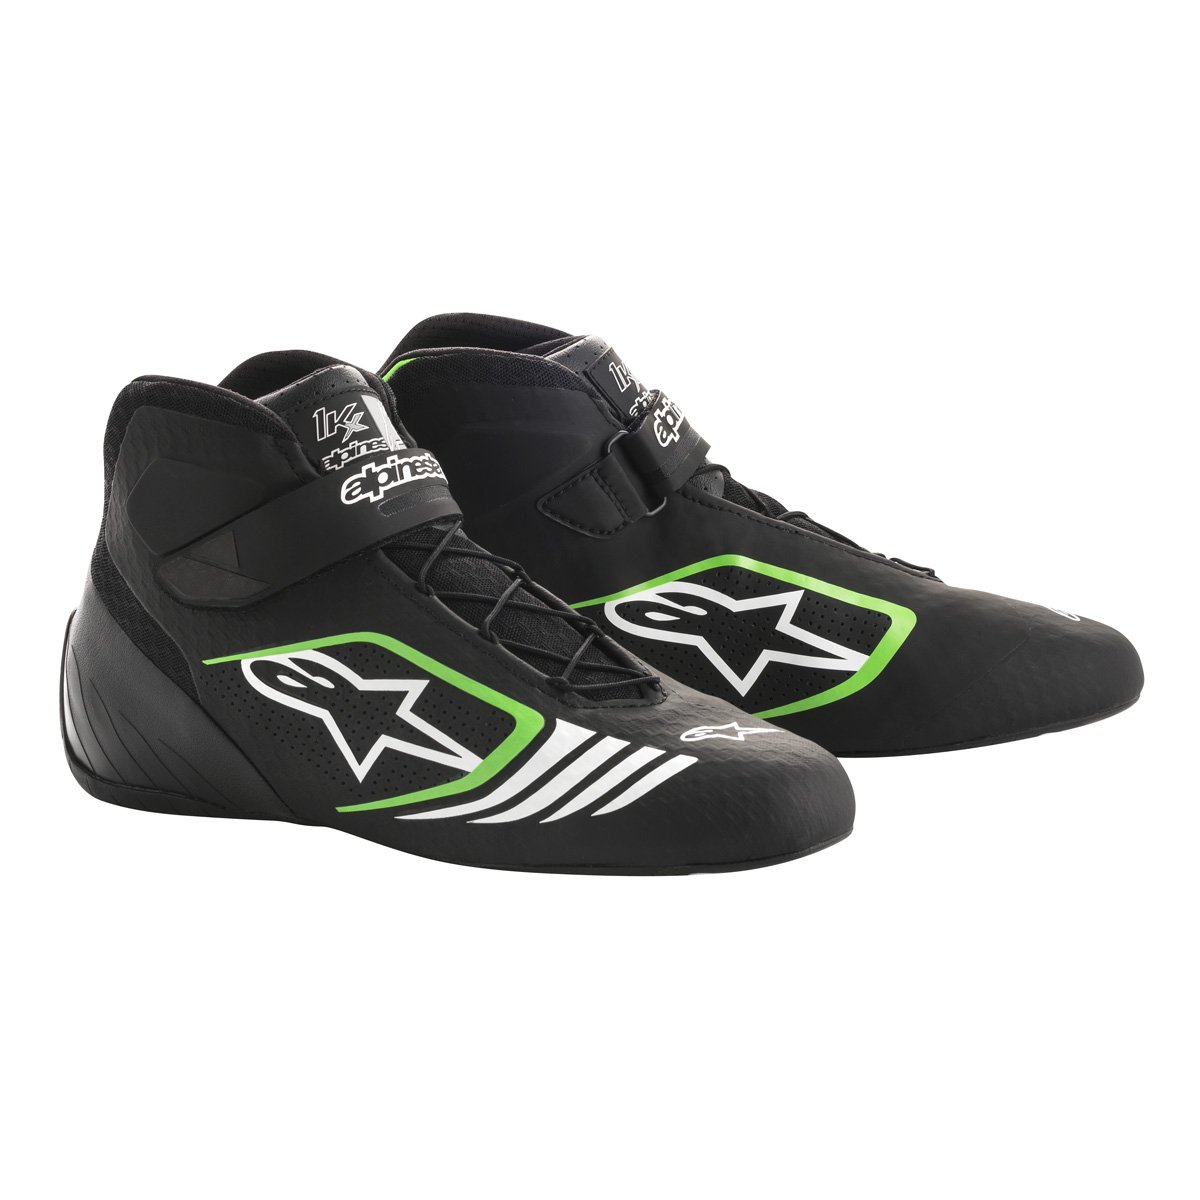 Alpinestars TECH-1 KX ботинки для картинга, черный/зеленый, р-р 42(EUR)/9(US)/8(UK). DARK-STOCK.RU